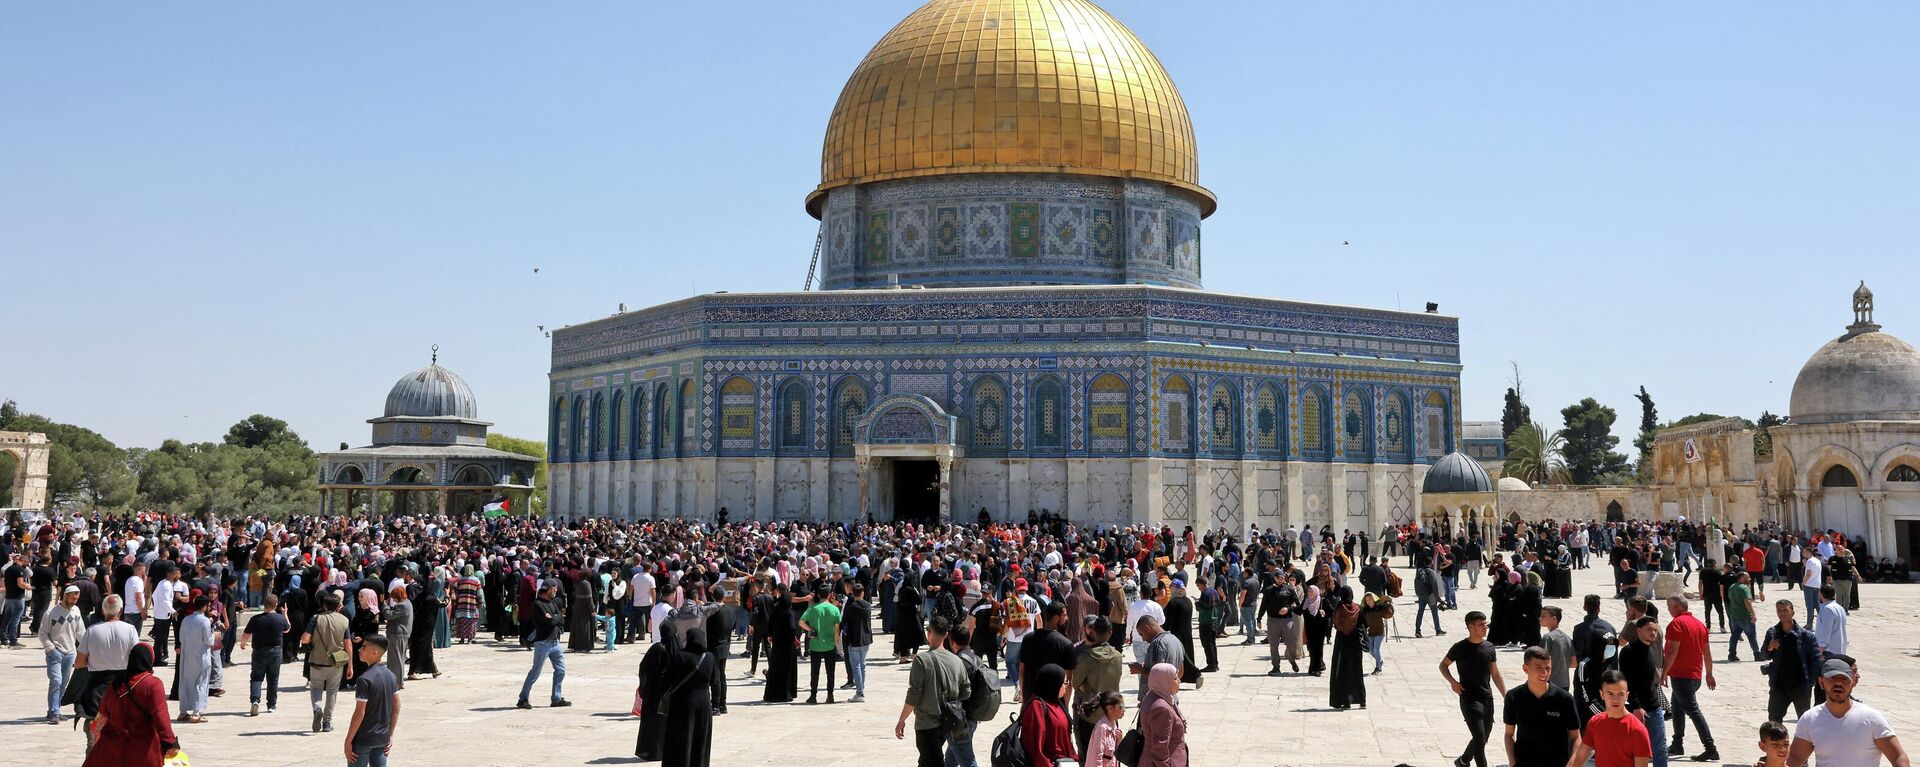 Palestinian Muslims gather at Jerusalem's Al-Aqsa mosque complex following Friday prayers during the holy month of Ramadan on April 15, 2022. - Sputnik International, 1920, 19.04.2022